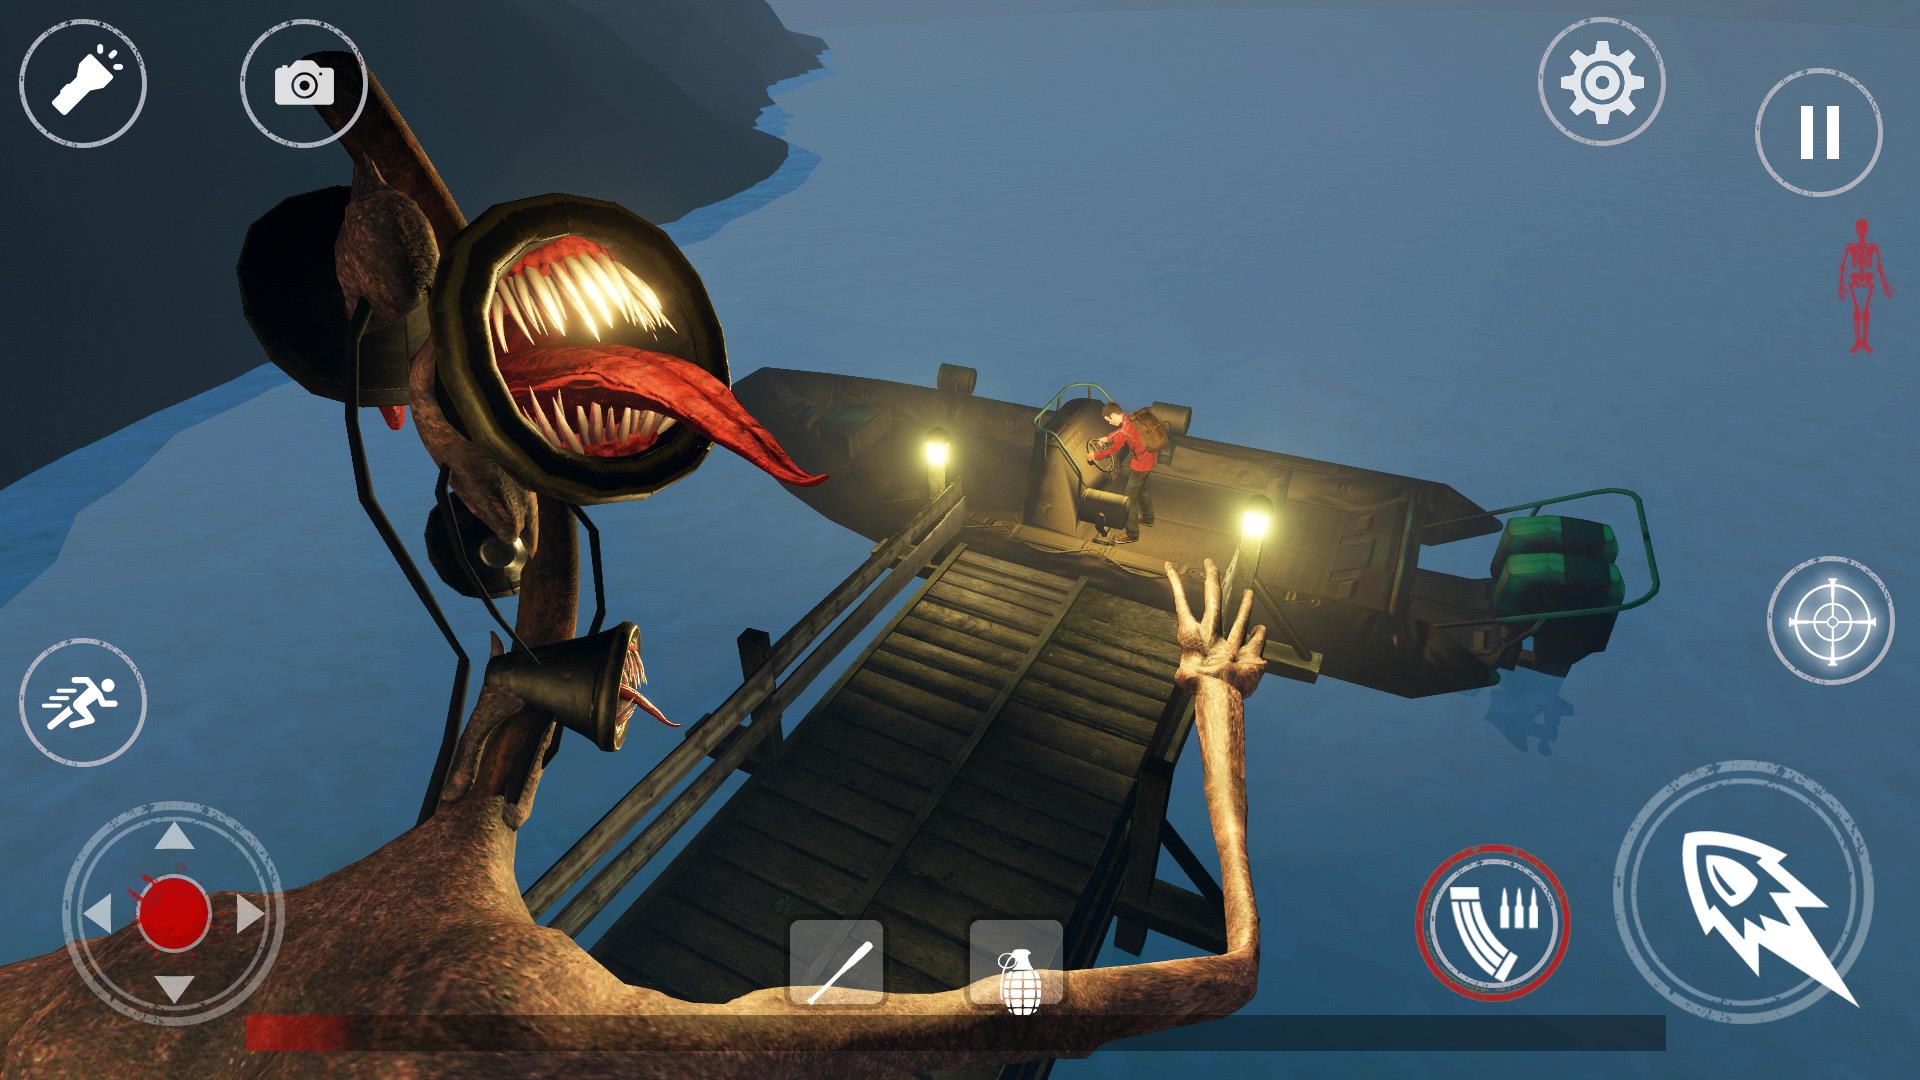 Siren Scary Head - Horror Game Screenshot 14